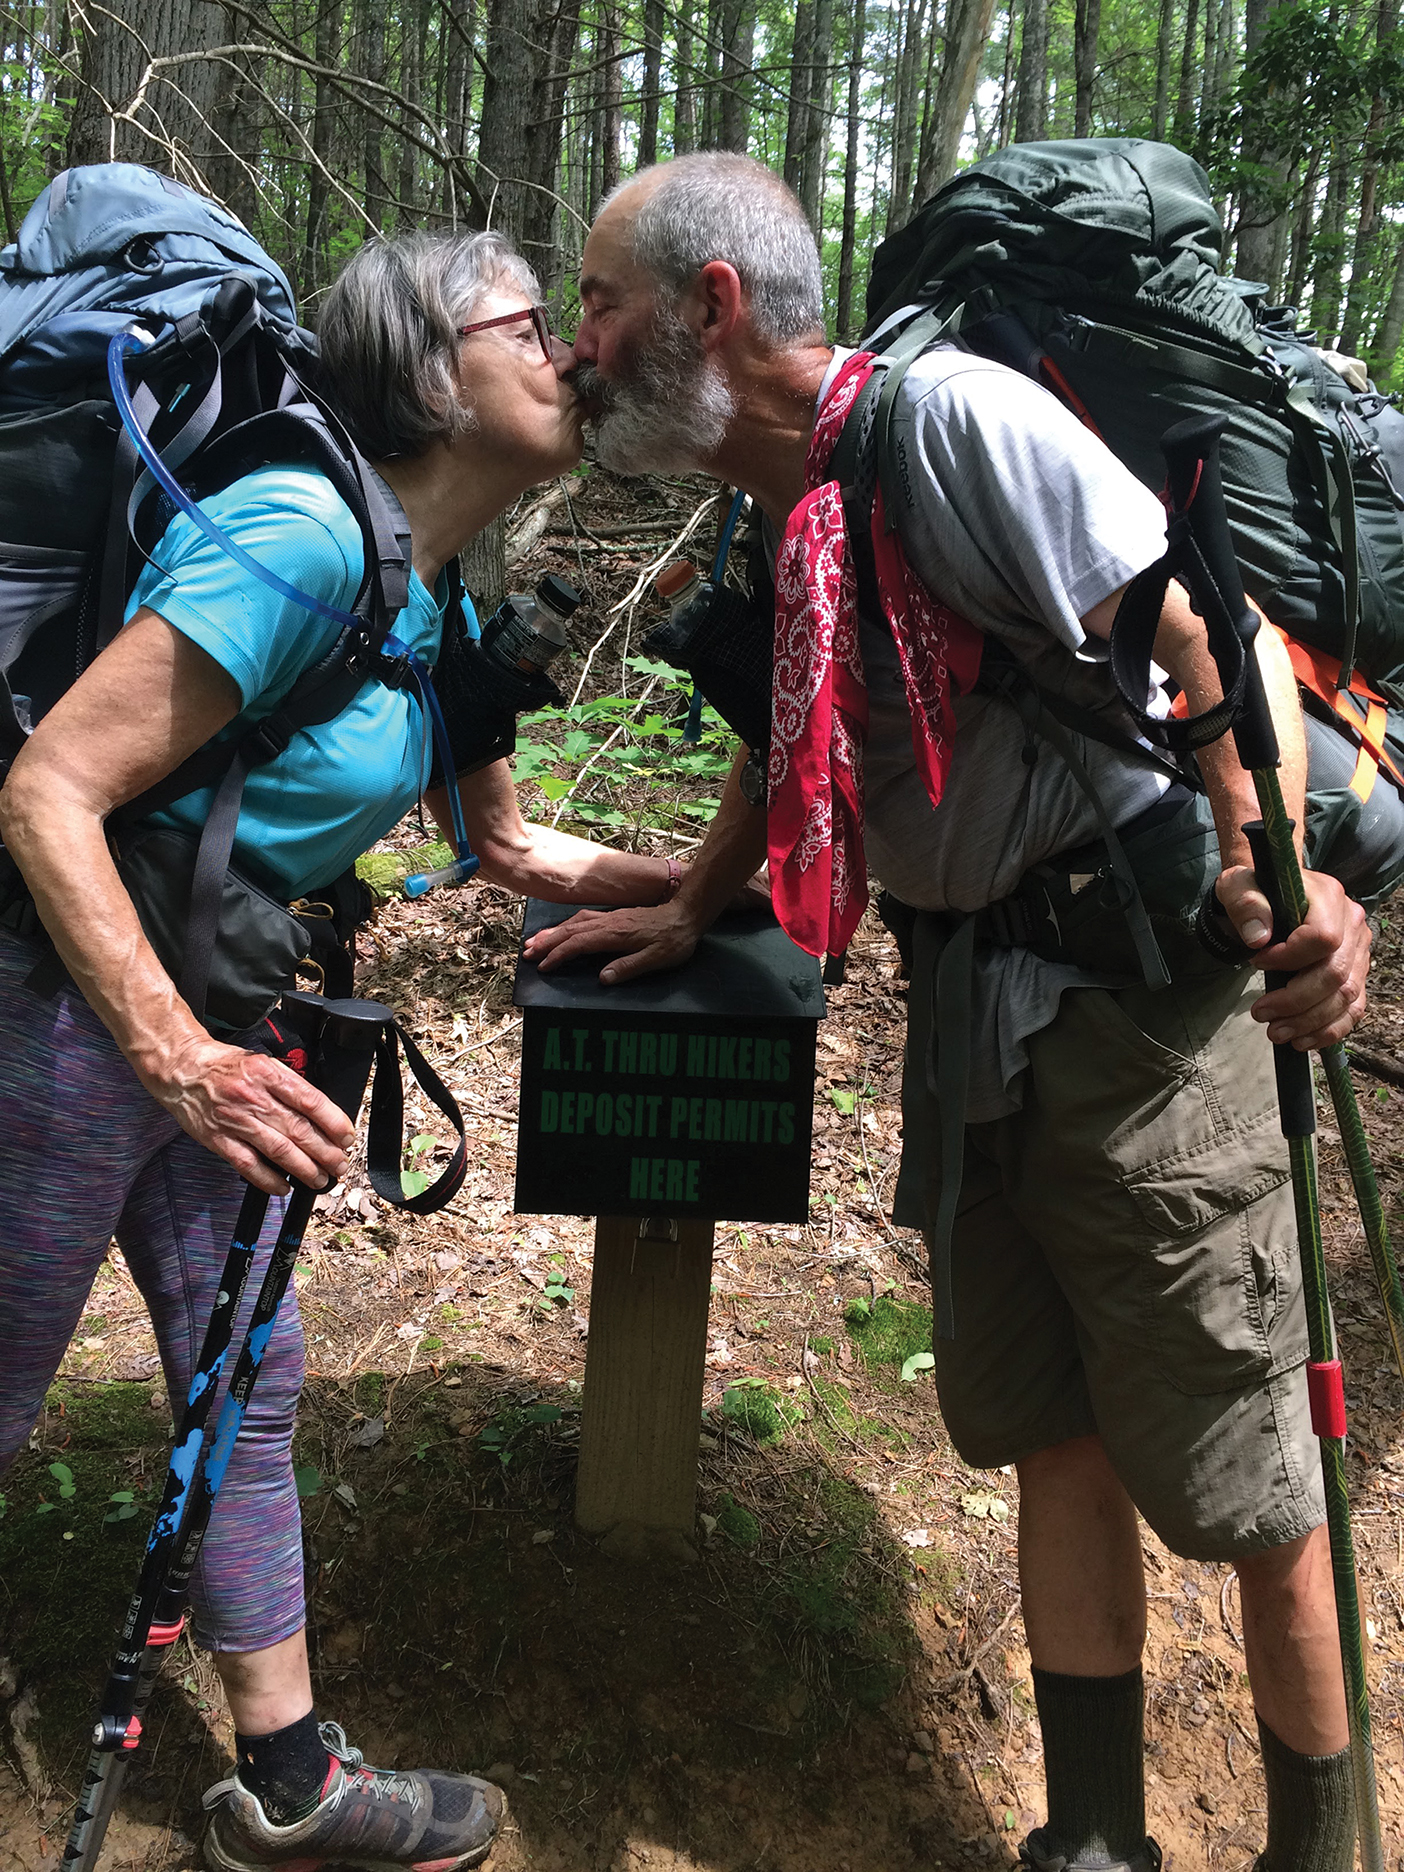 John and Shauna Dickson kiss over a trail sign on the Appalachian Trail